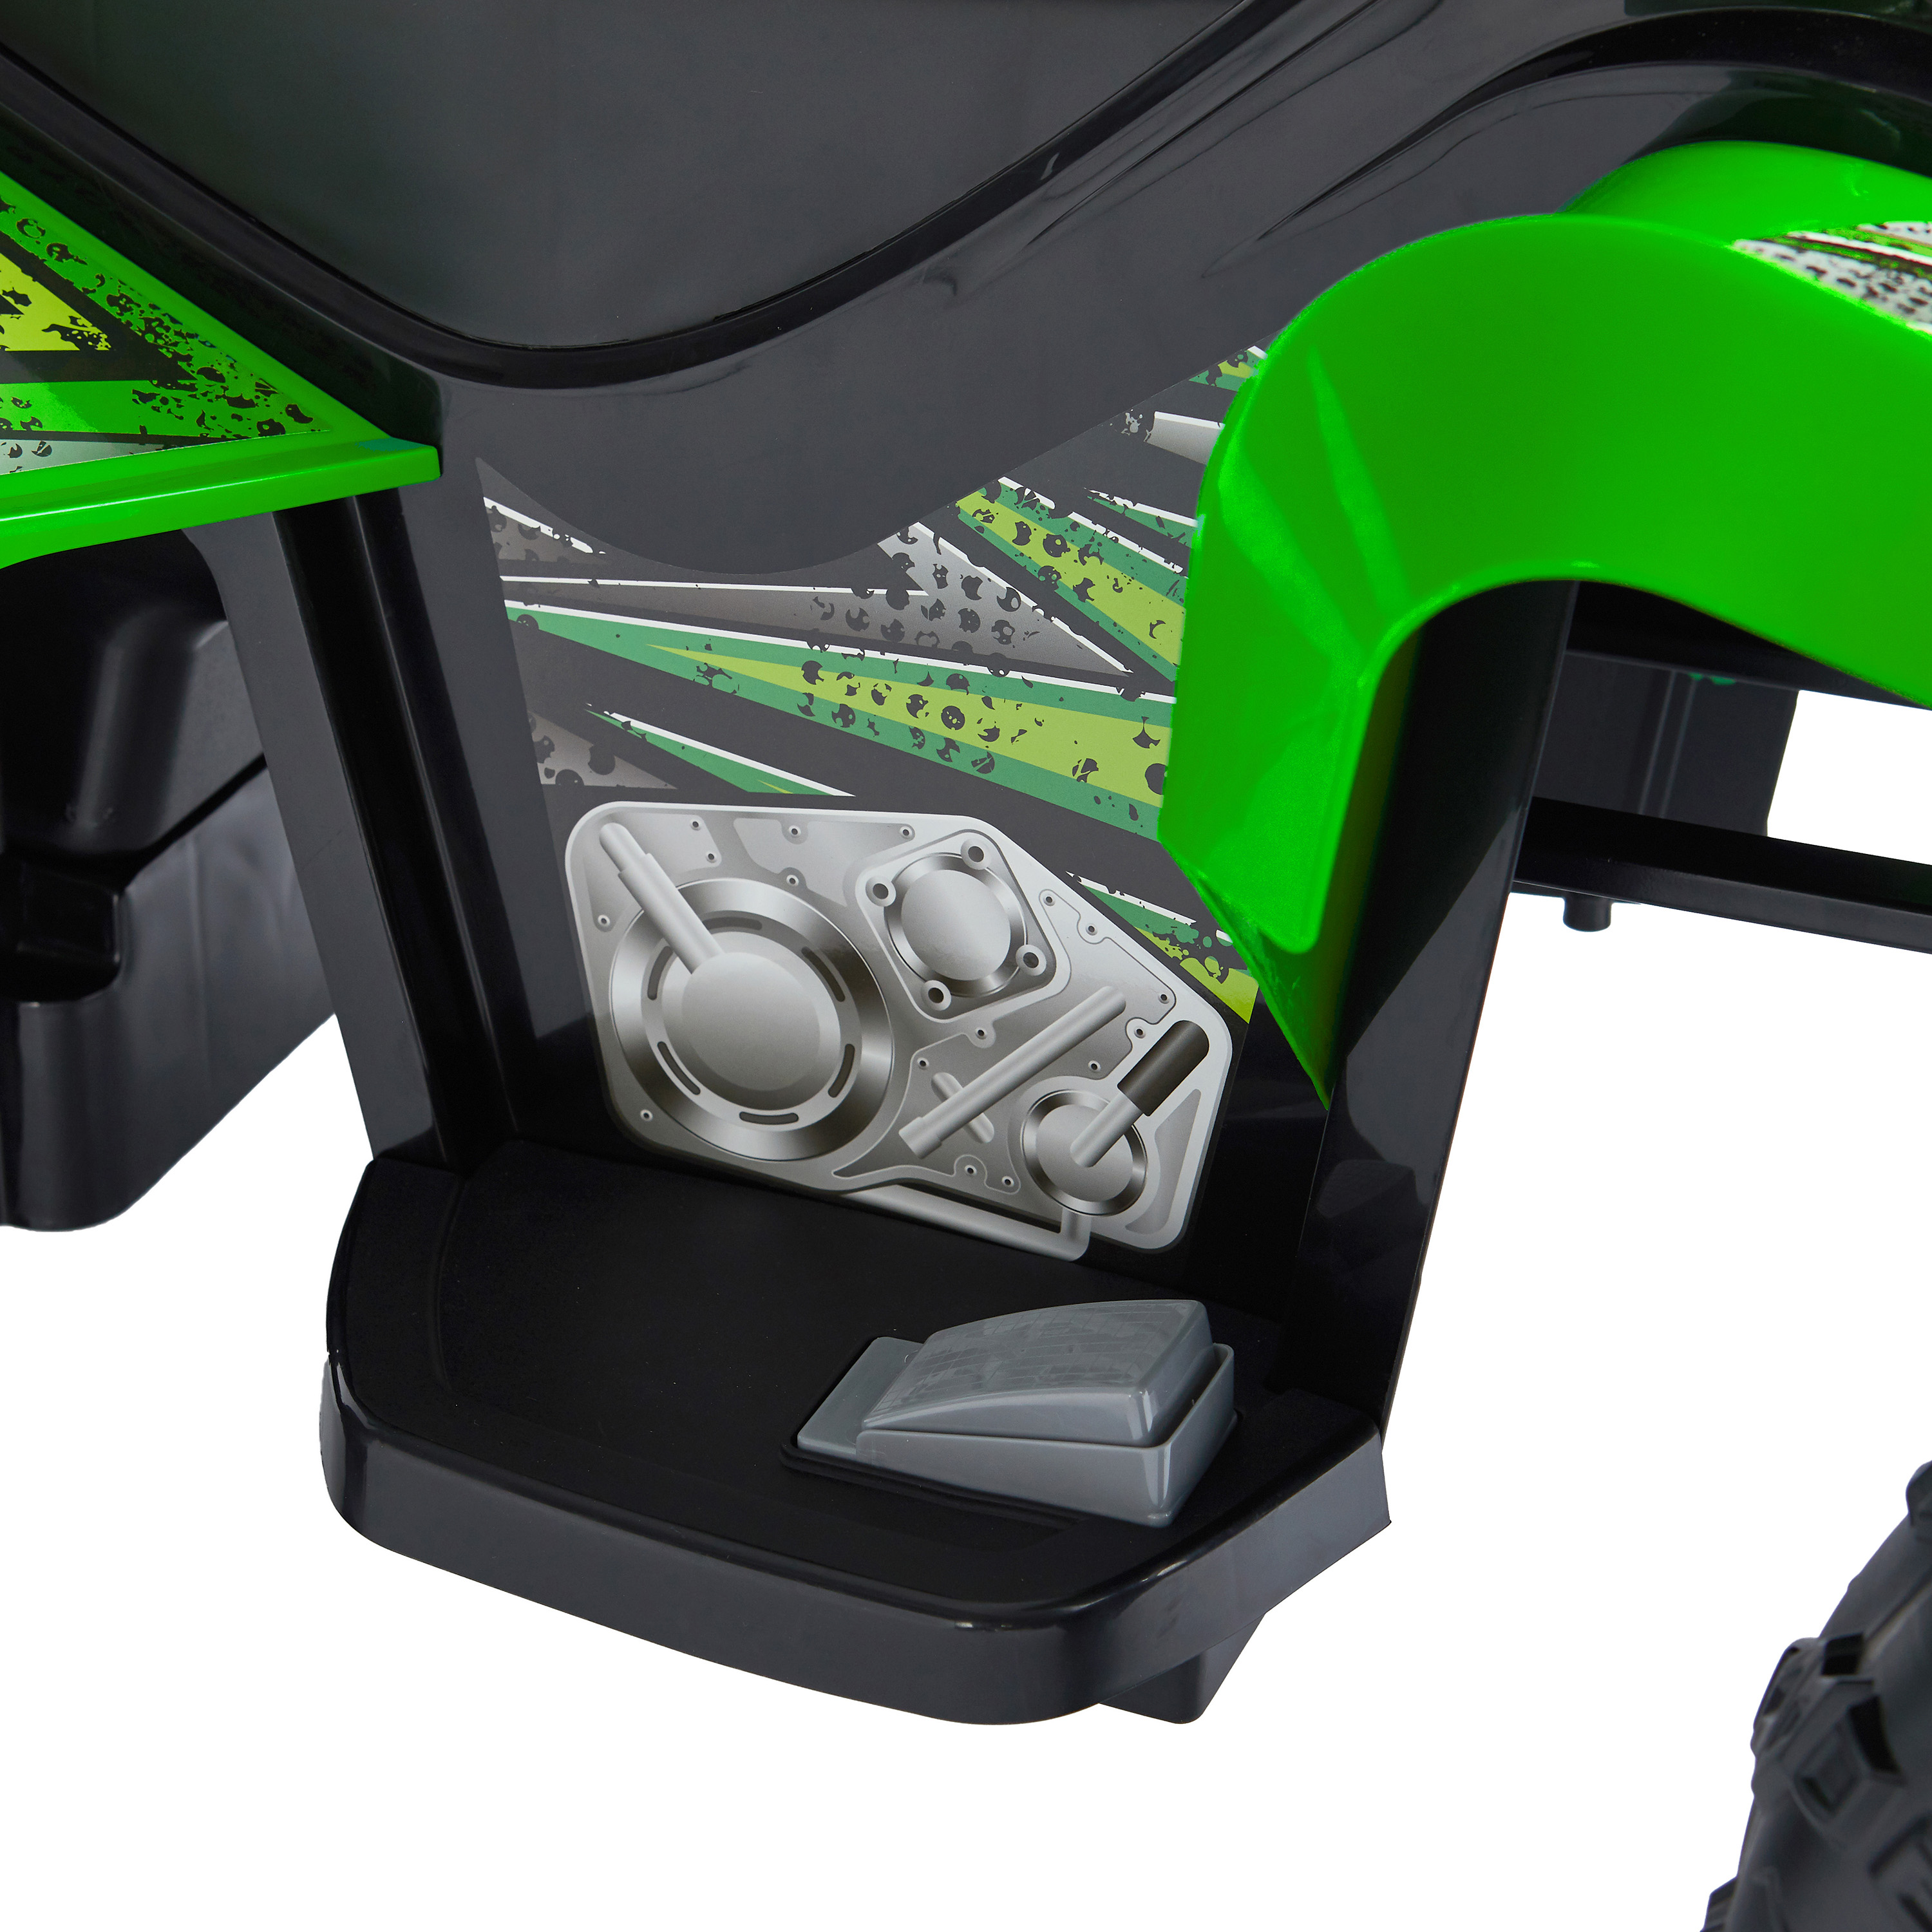 Kalee 12V Giant Quad ATV Battery Powered Ride On, Green - image 4 of 8